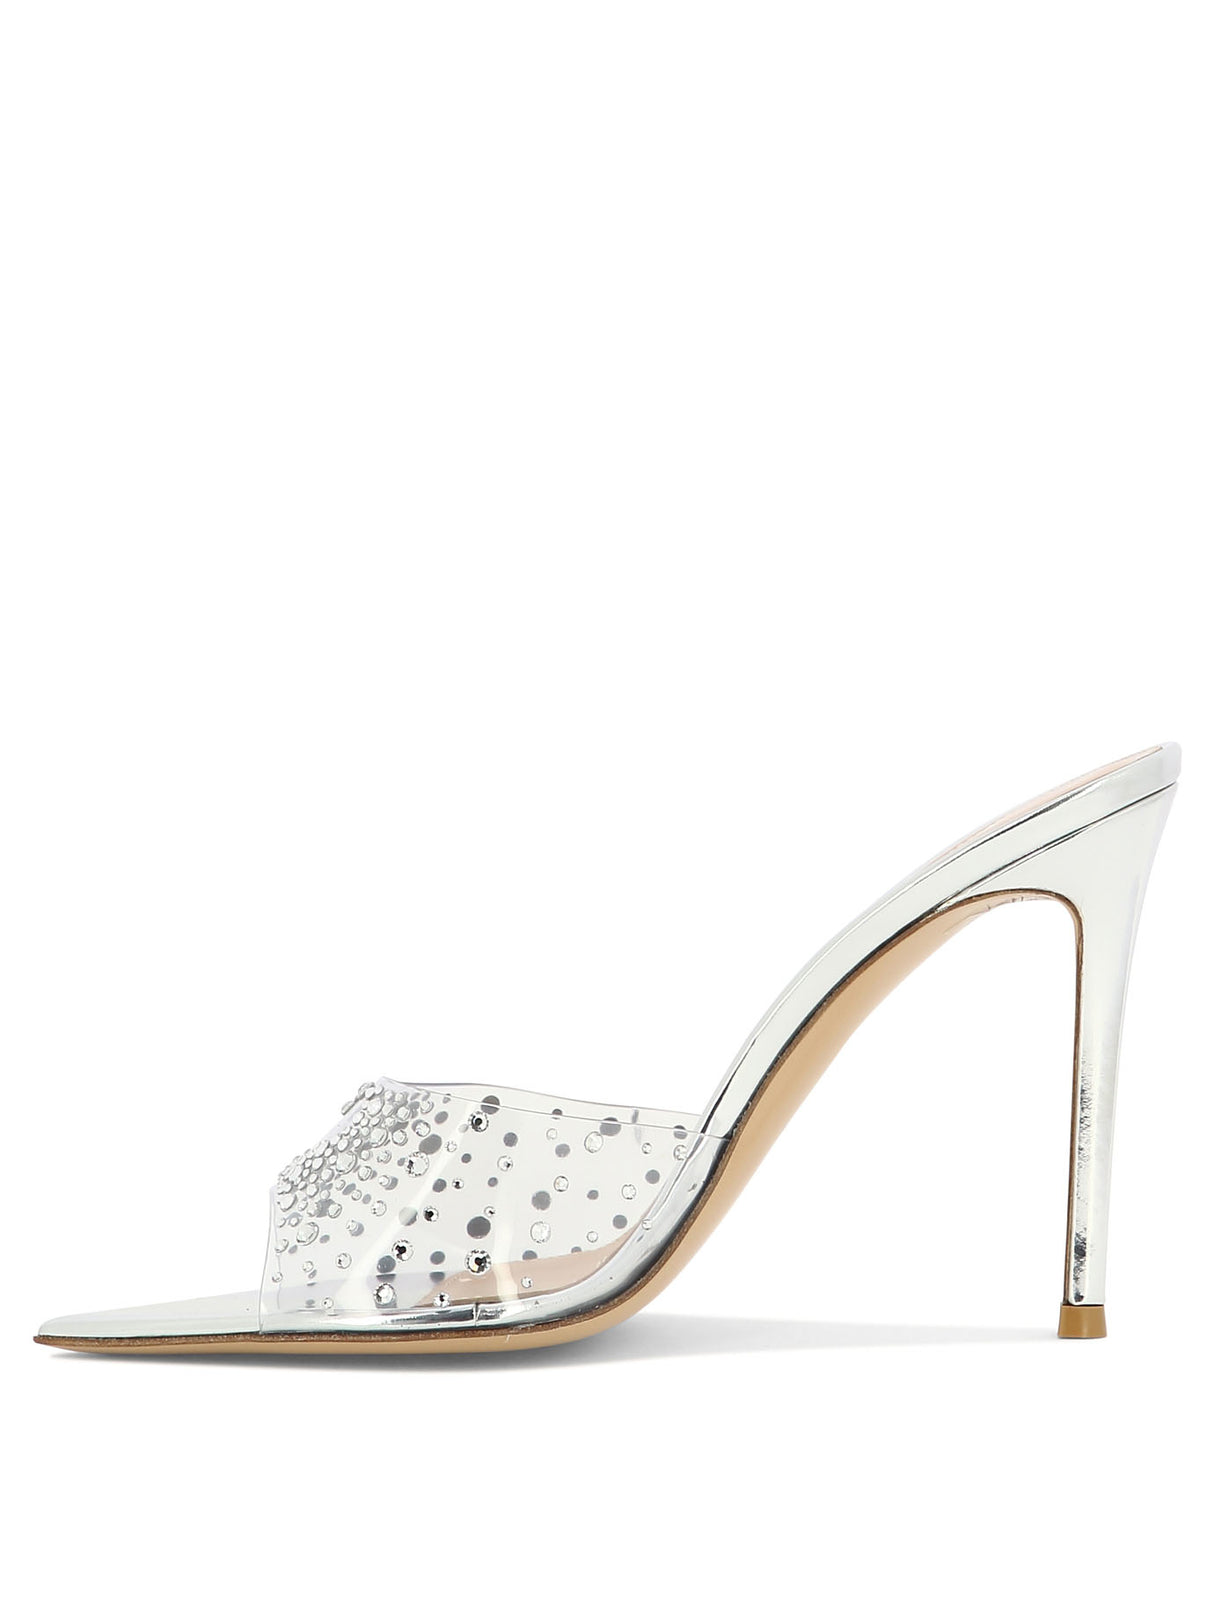 GIANVITO ROSSI Silver Slip-On Sandals for Women